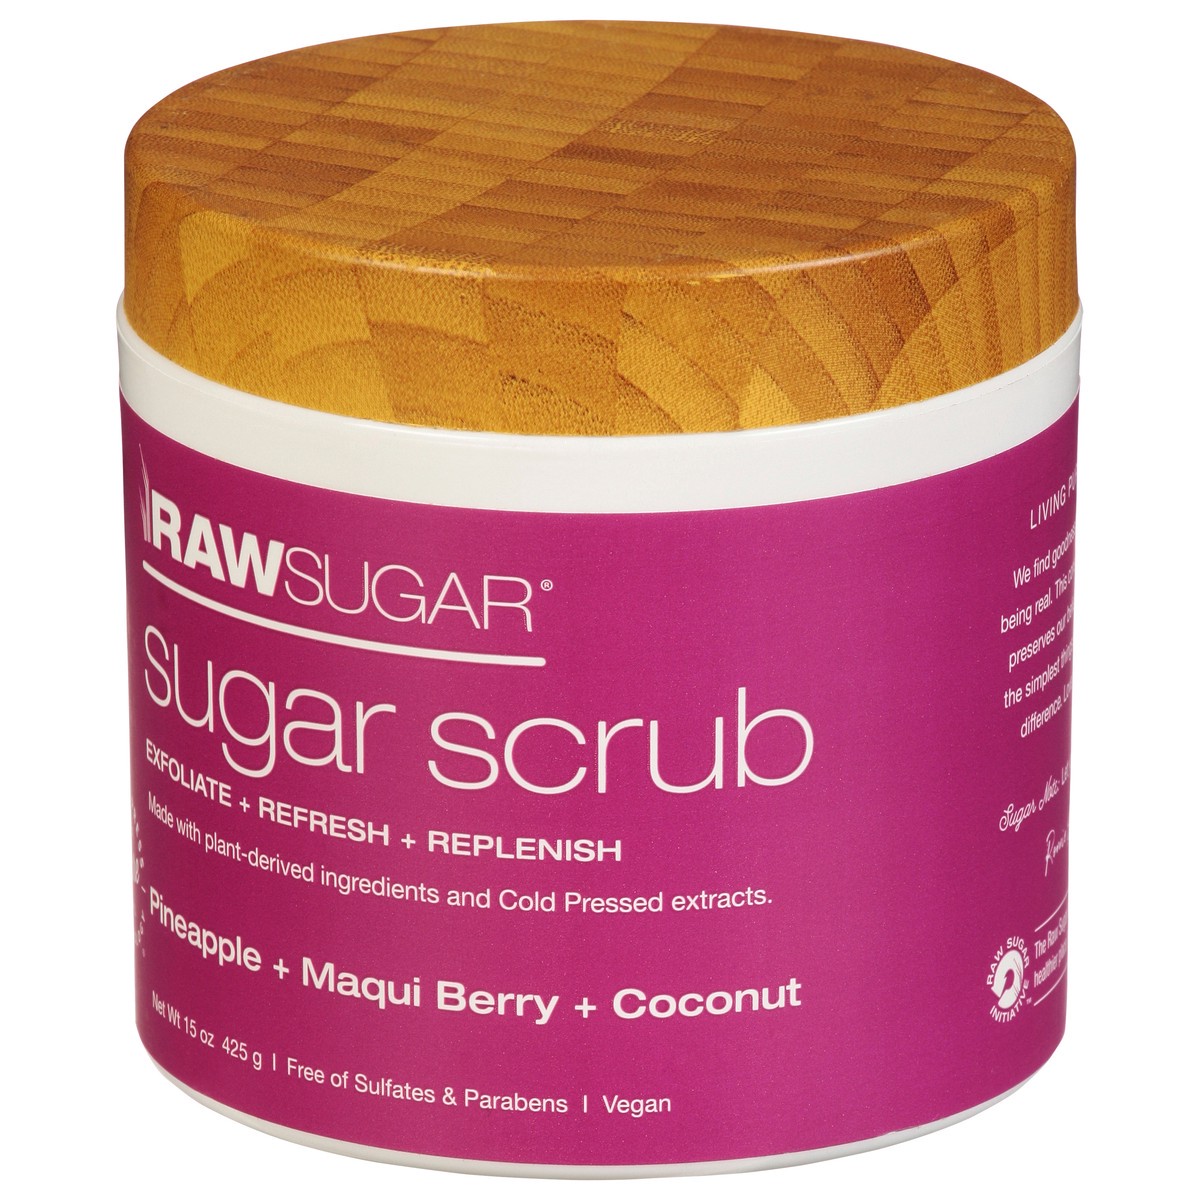 slide 7 of 13, Raw Sugar Sugar Scrub Pineapple + Maqui Berry + Coconut, 15 fl oz